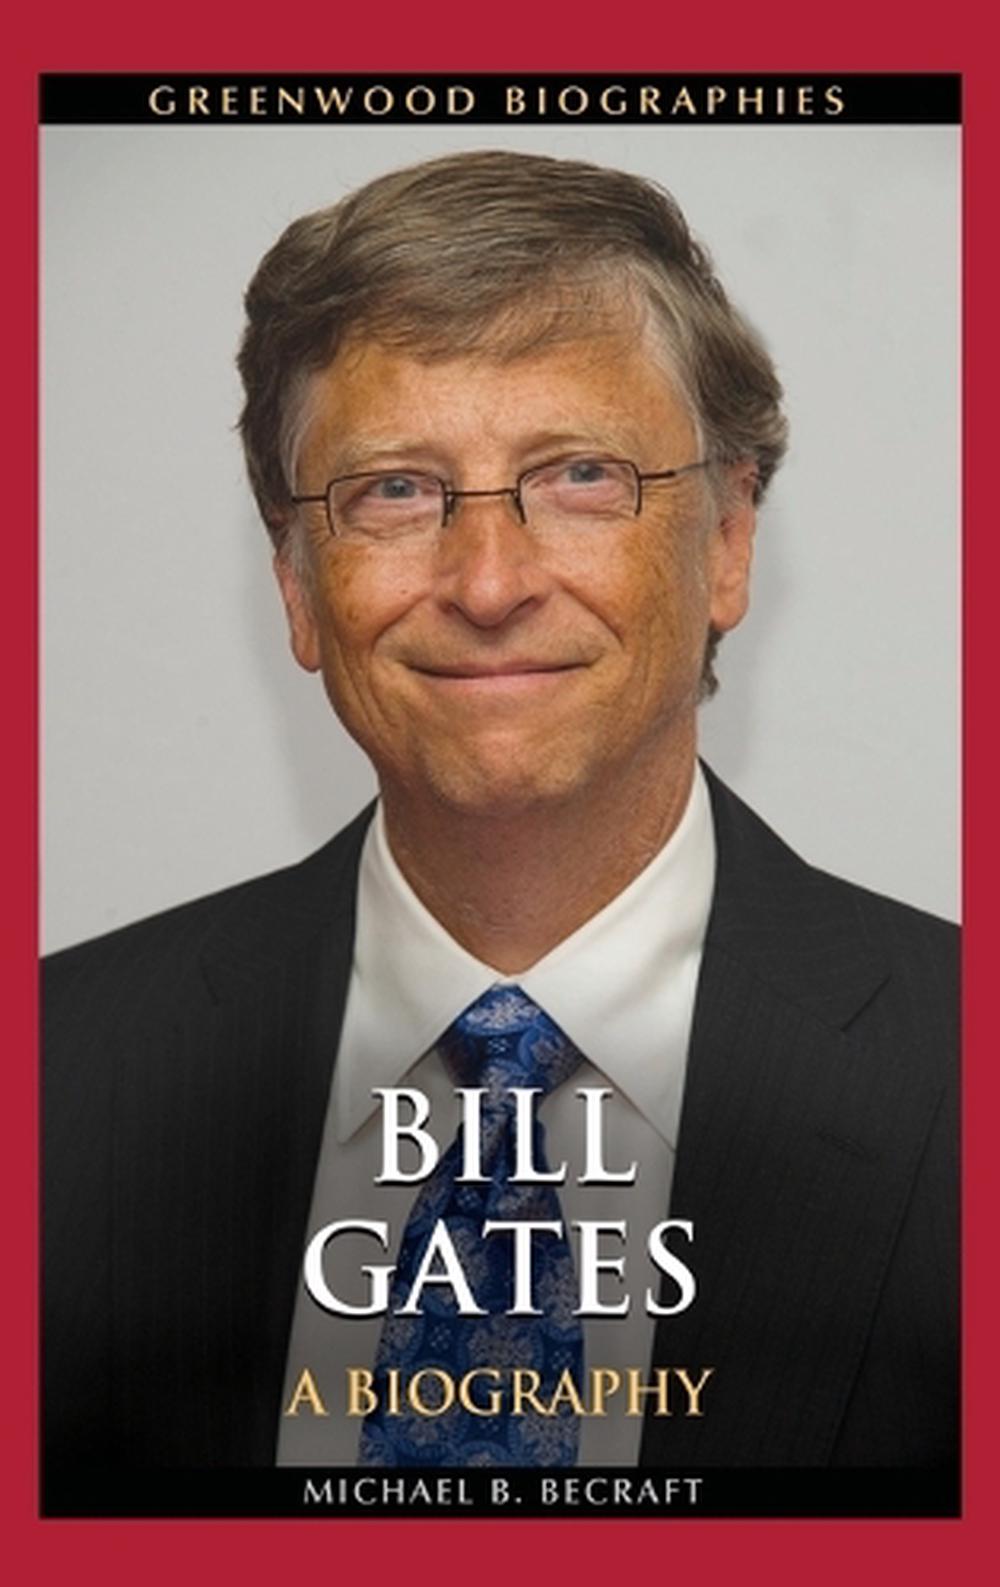 biography book of bill gates